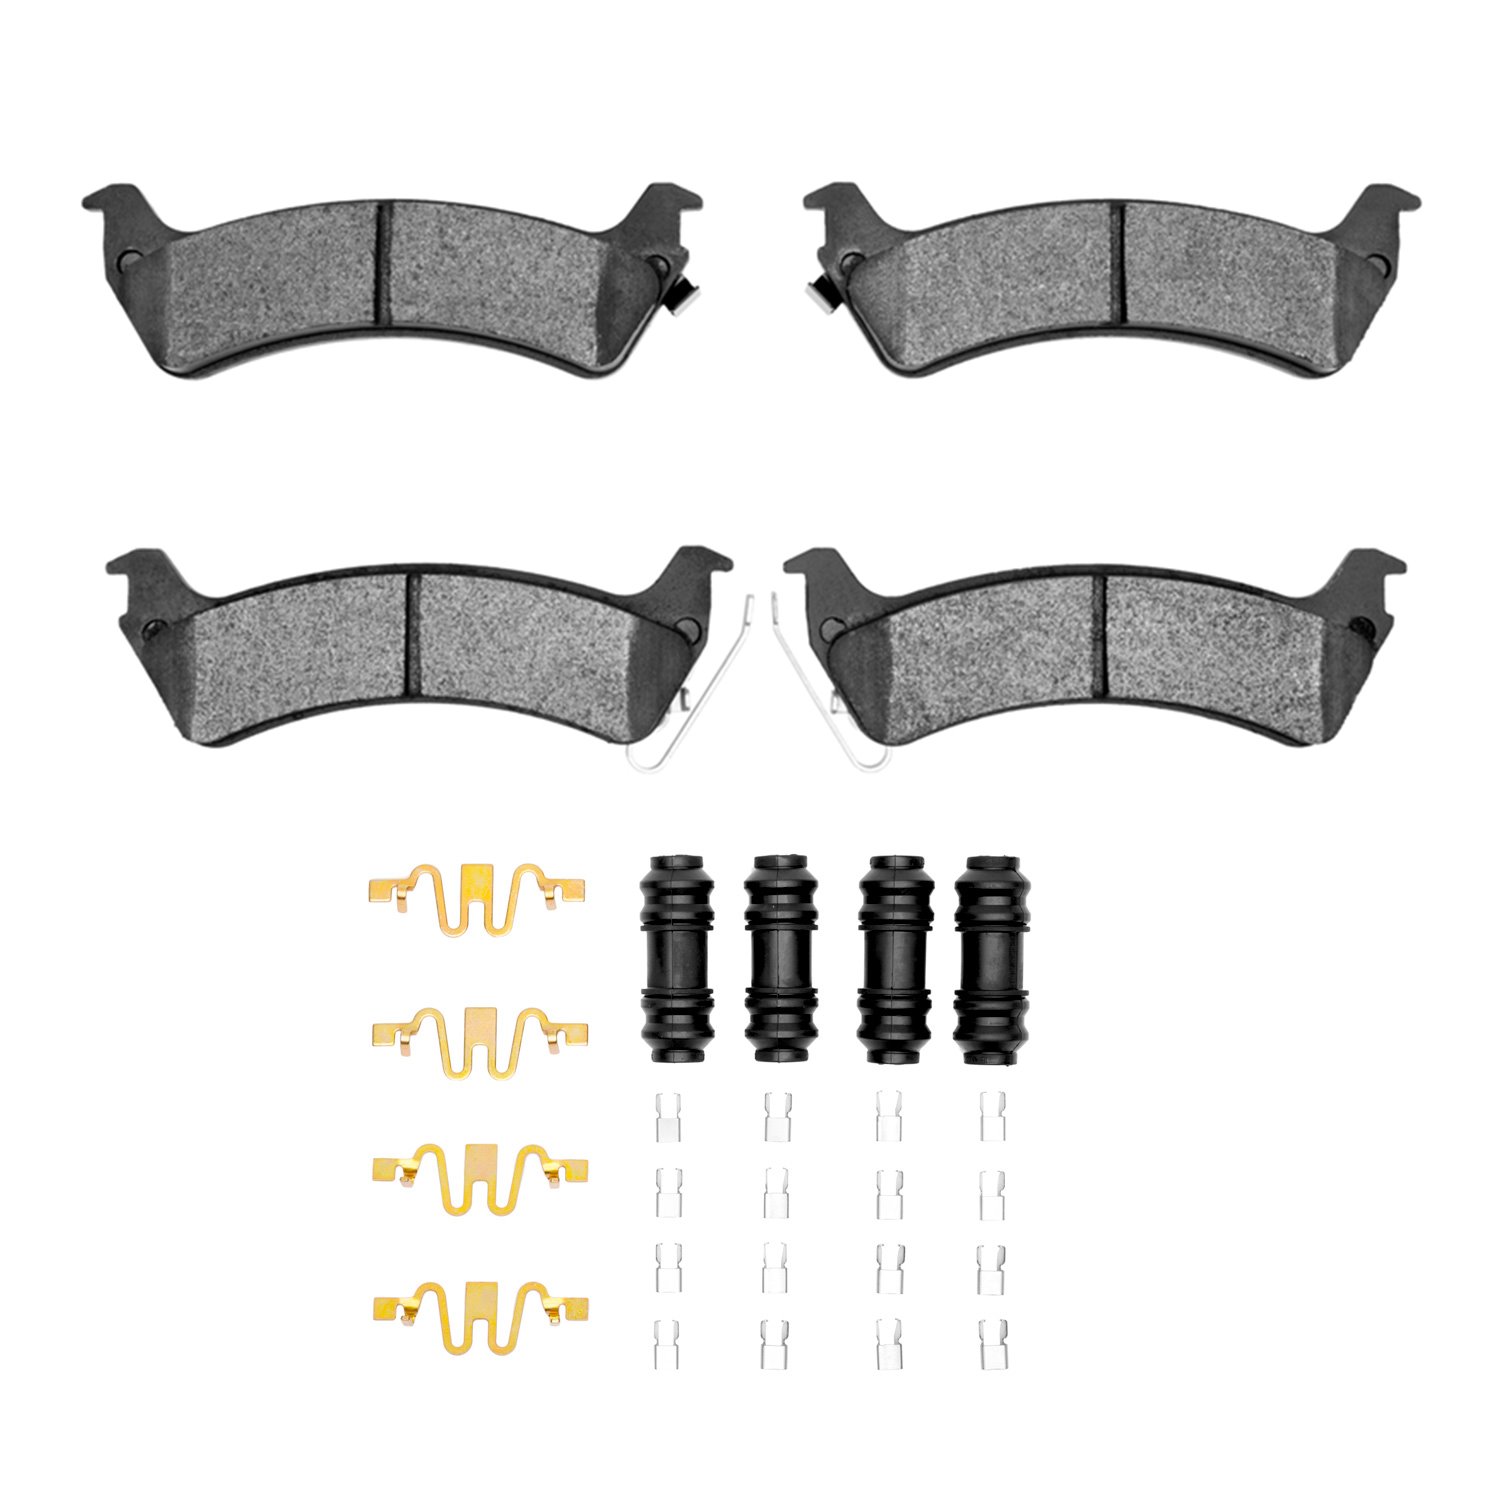 5000 Advanced CeMoparic Brake Pads & Hardware Kit,